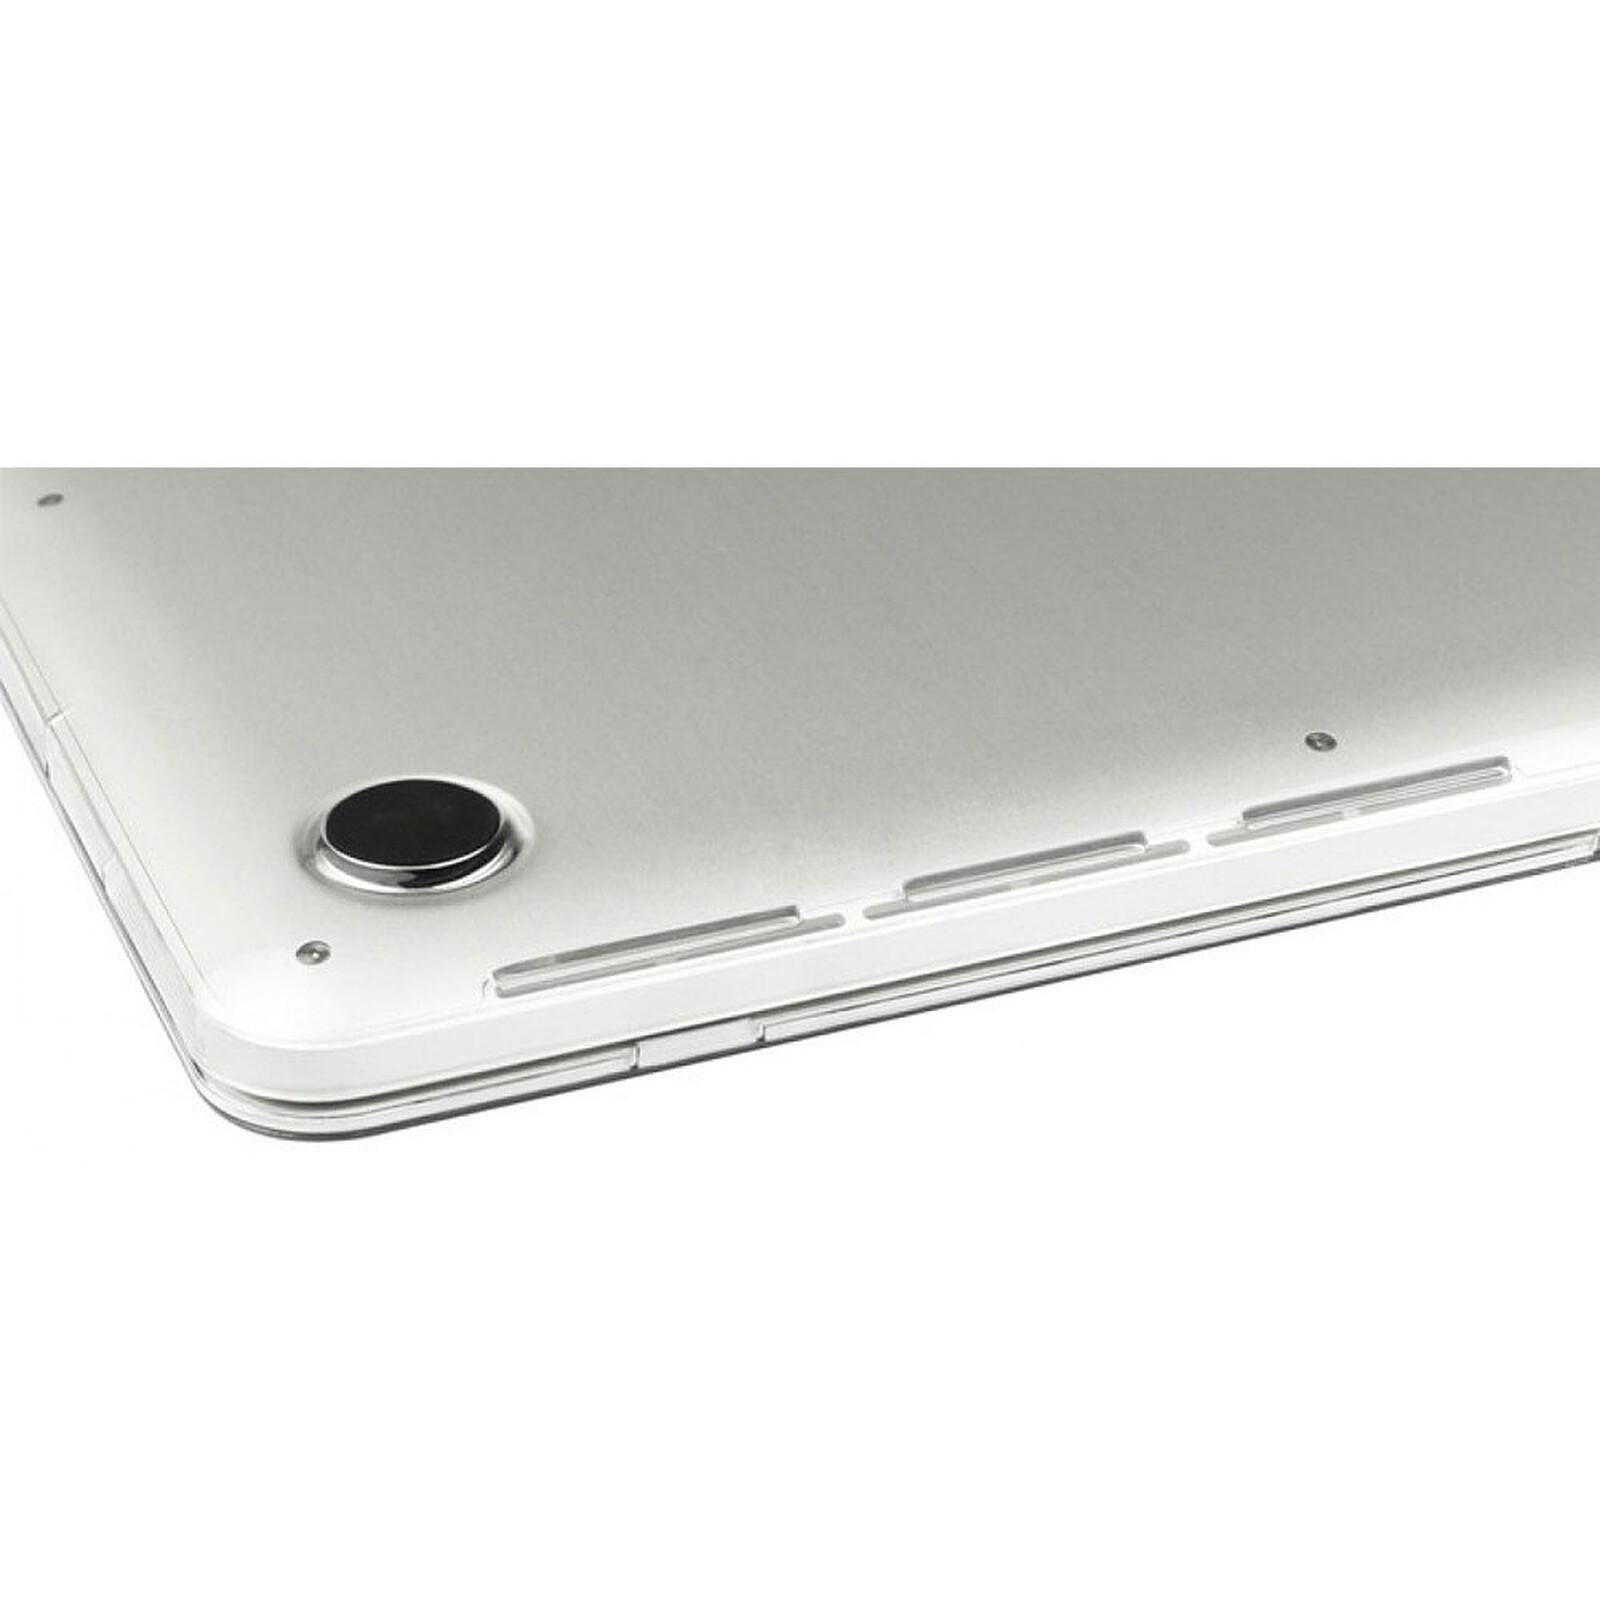 Maclocks Premium Hardshell MacBook Pro 15quot; Transparent  Accessoires Apple Maclocks sur LDLC.com